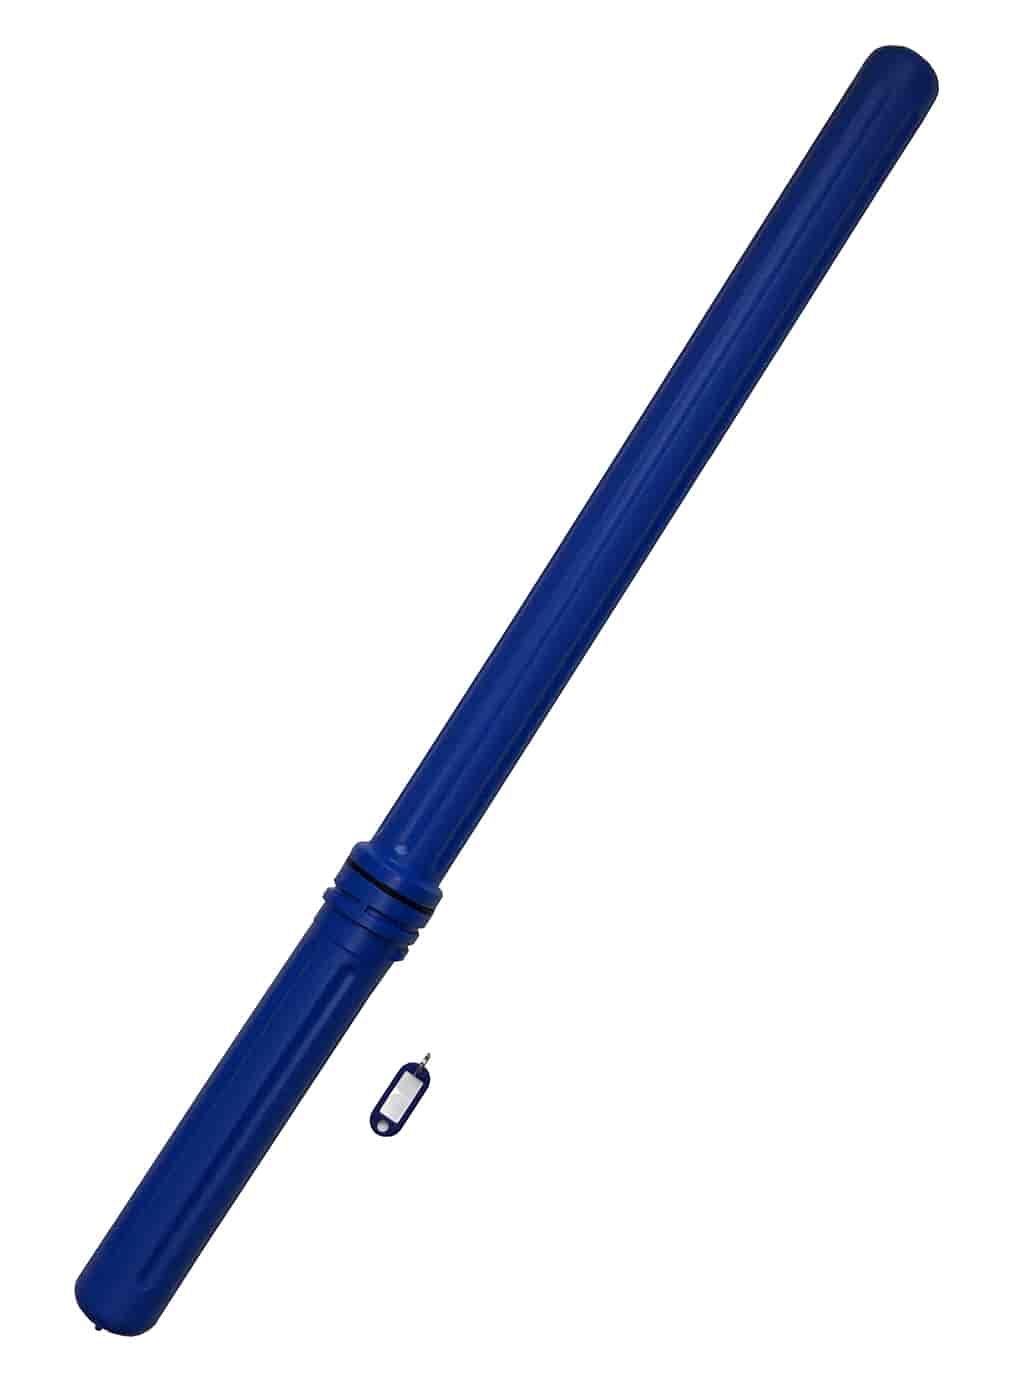 RST-36-BLUE 36 in. TIG Rod Storage Tube [Blue]